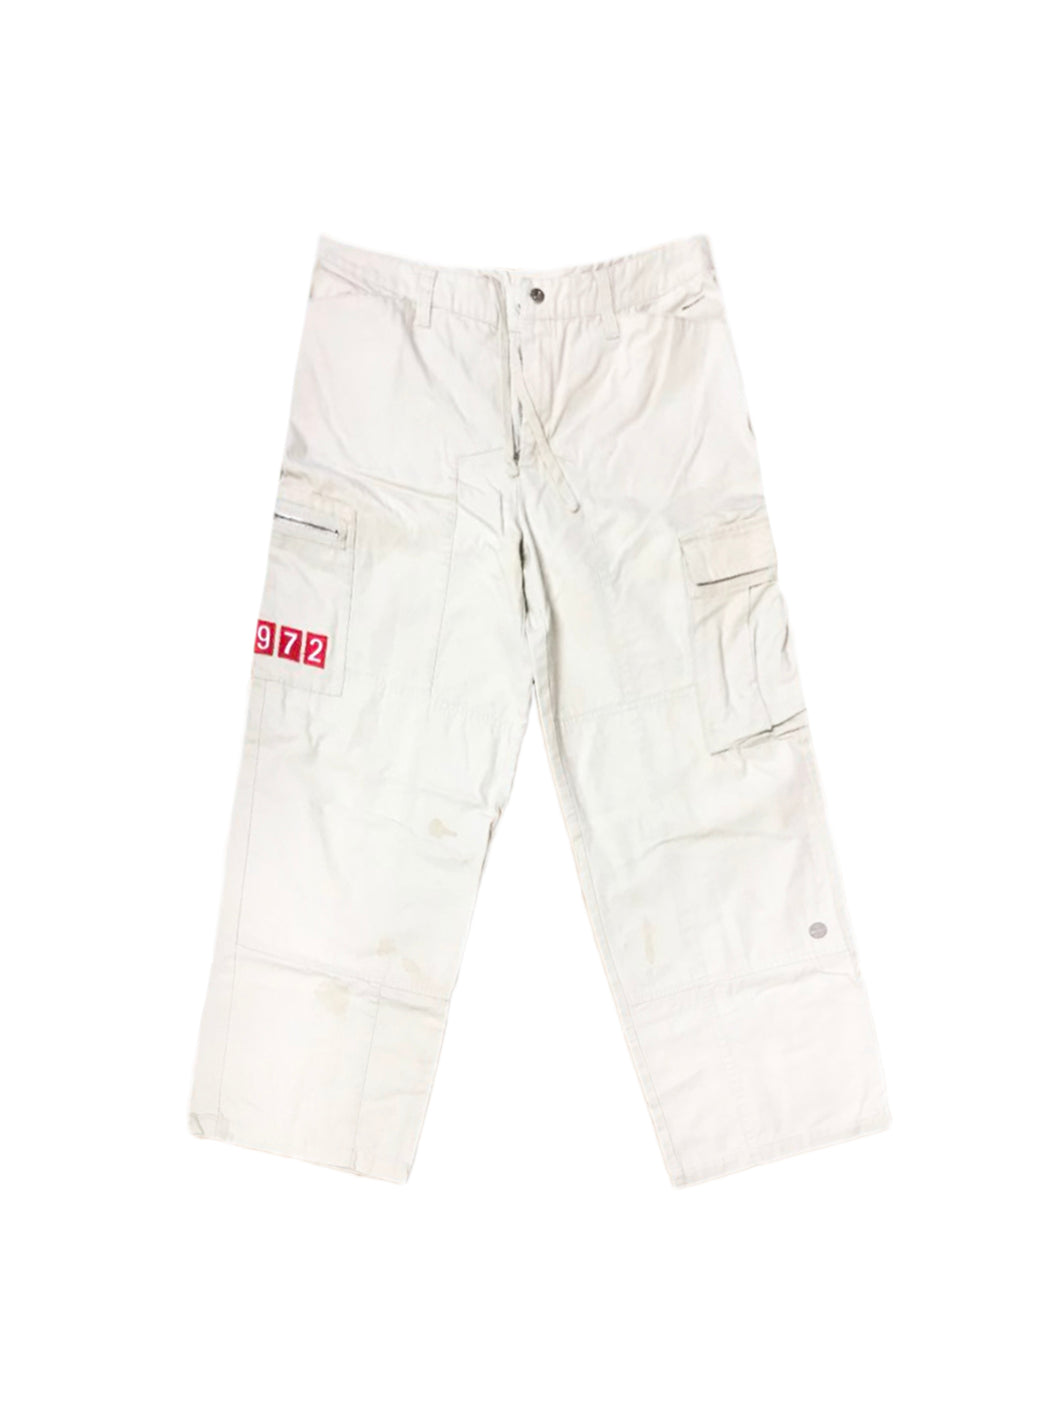 Nike White Cargo Pants